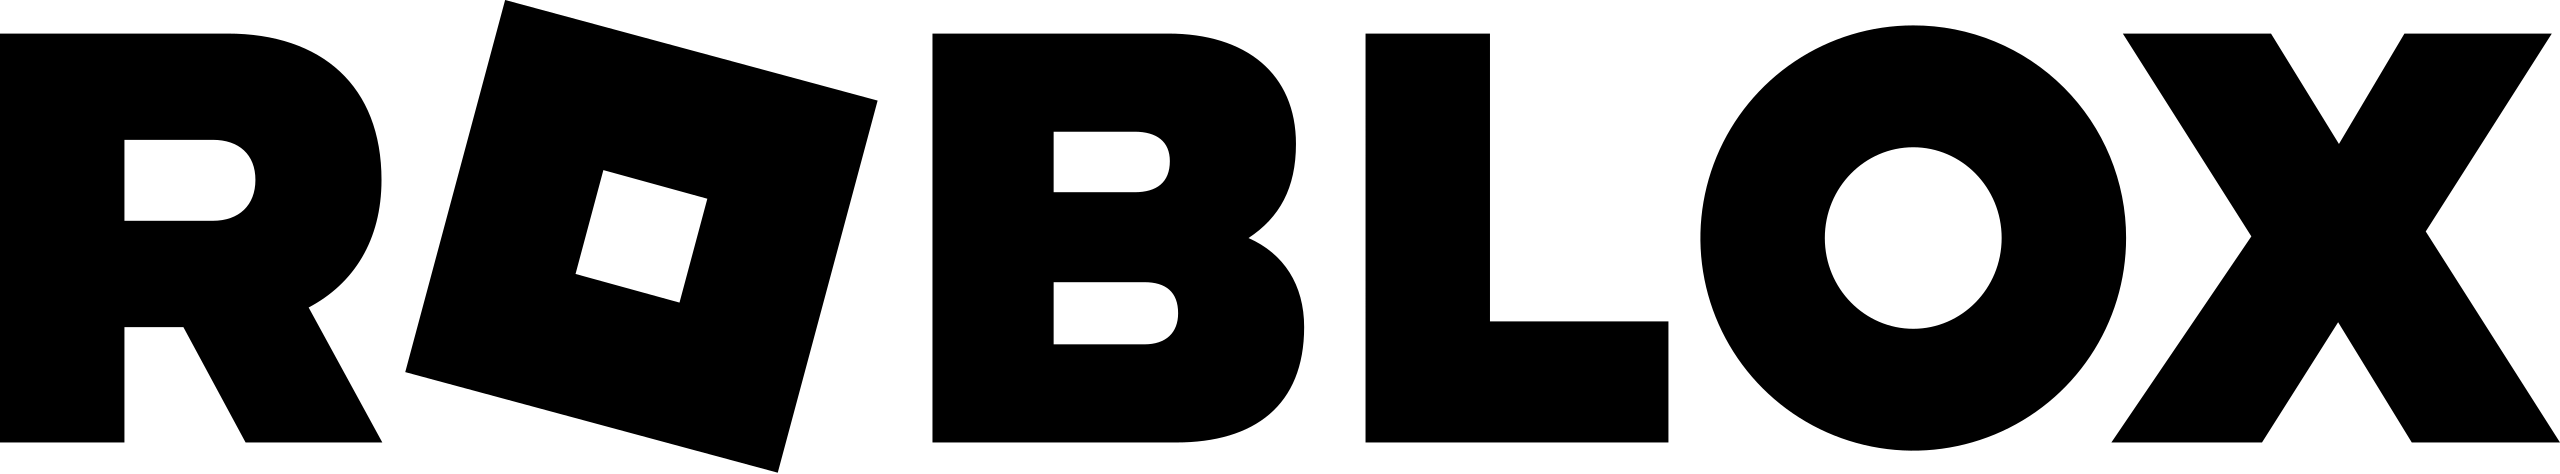 roblox-logo-black-png-transparent